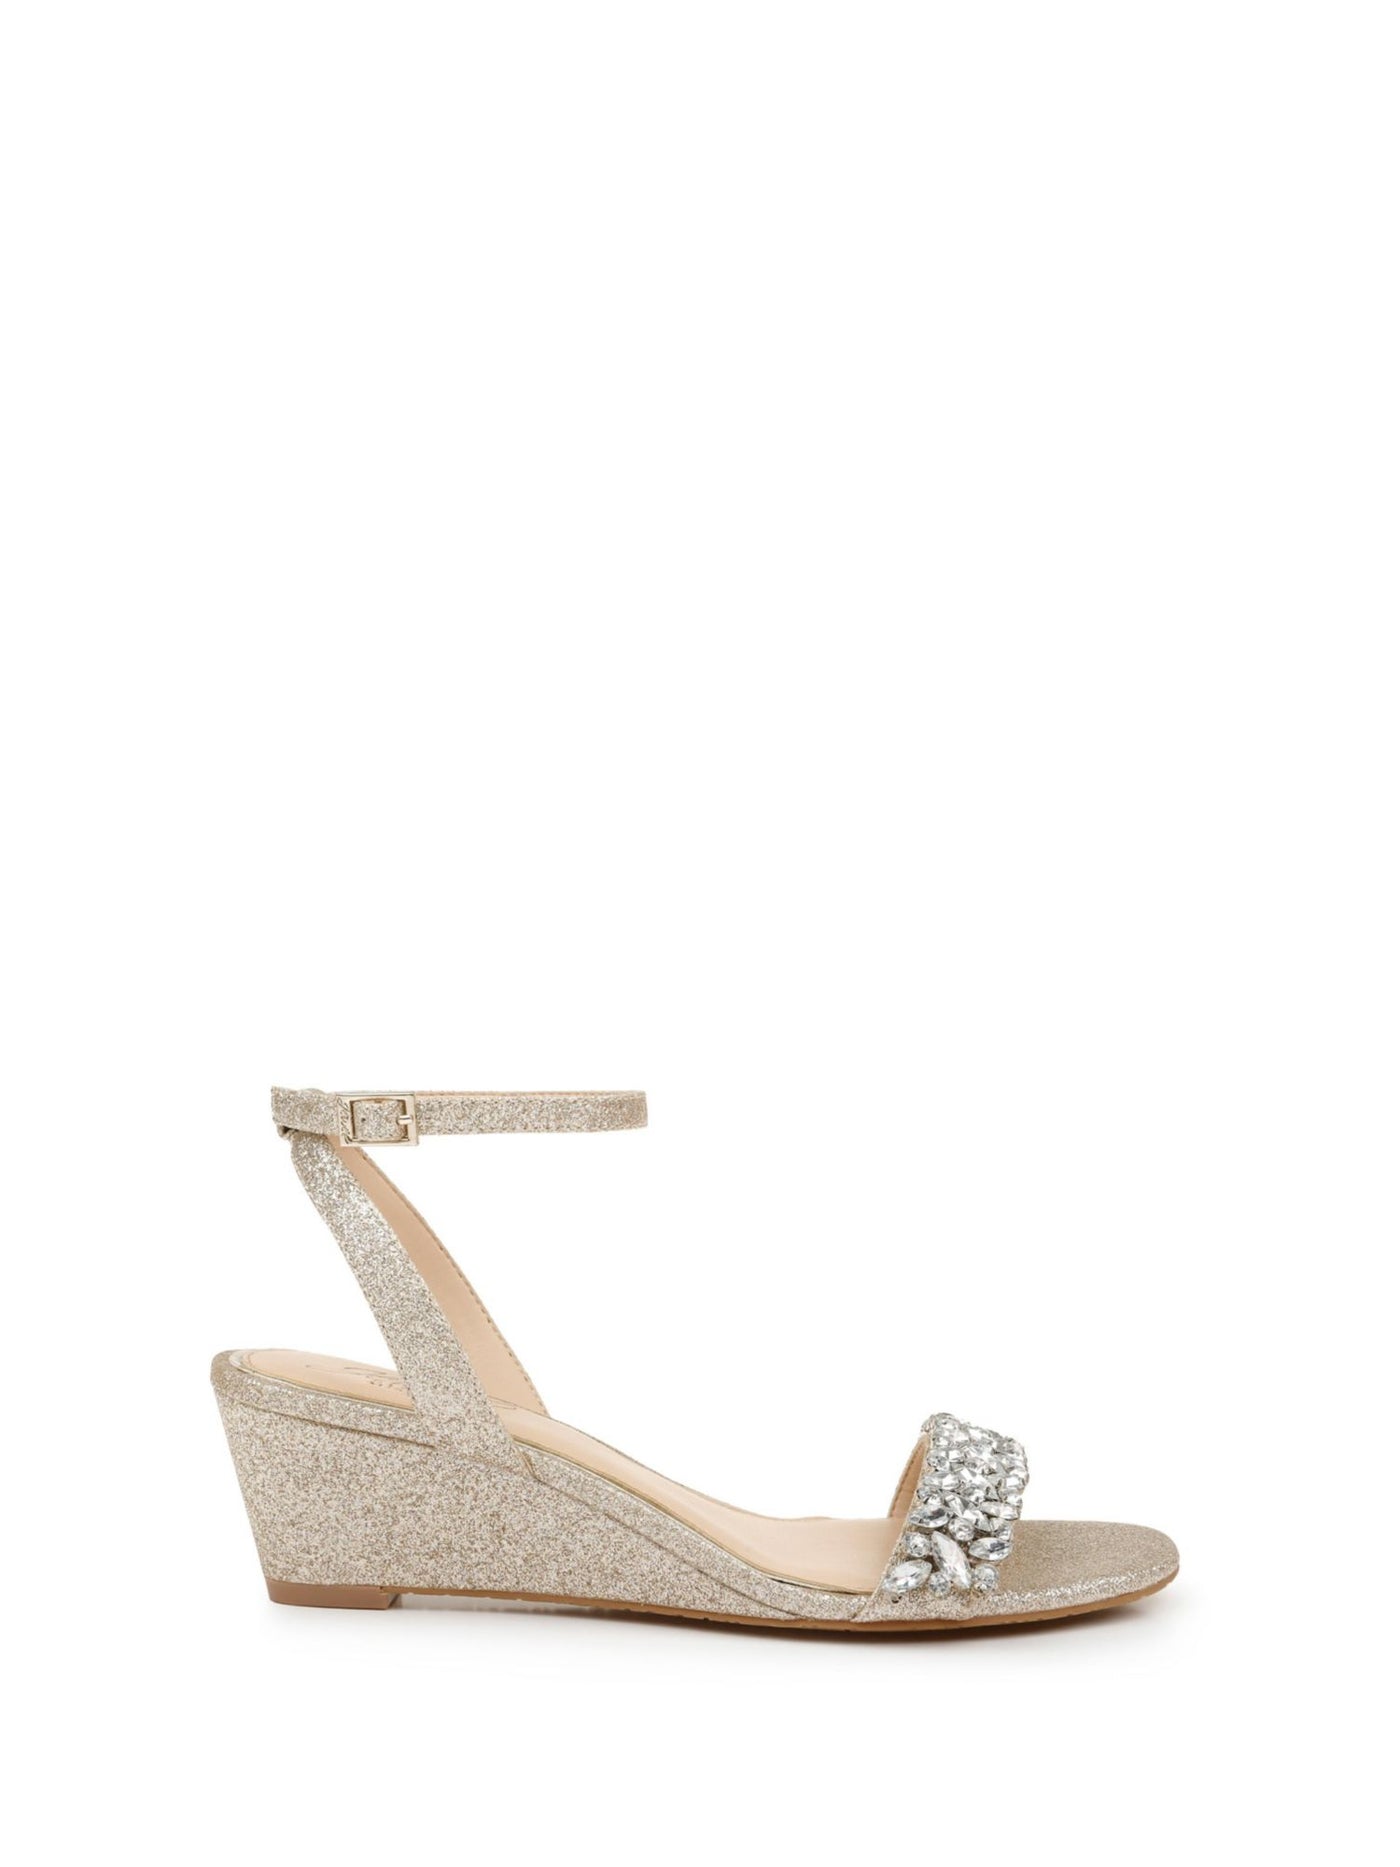 JEWEL BADGLEY MISCHKA Womens Gold Ankle Strap Glitter Bellevue Round Toe Wedge Buckle Dress Sandals Shoes 8 M